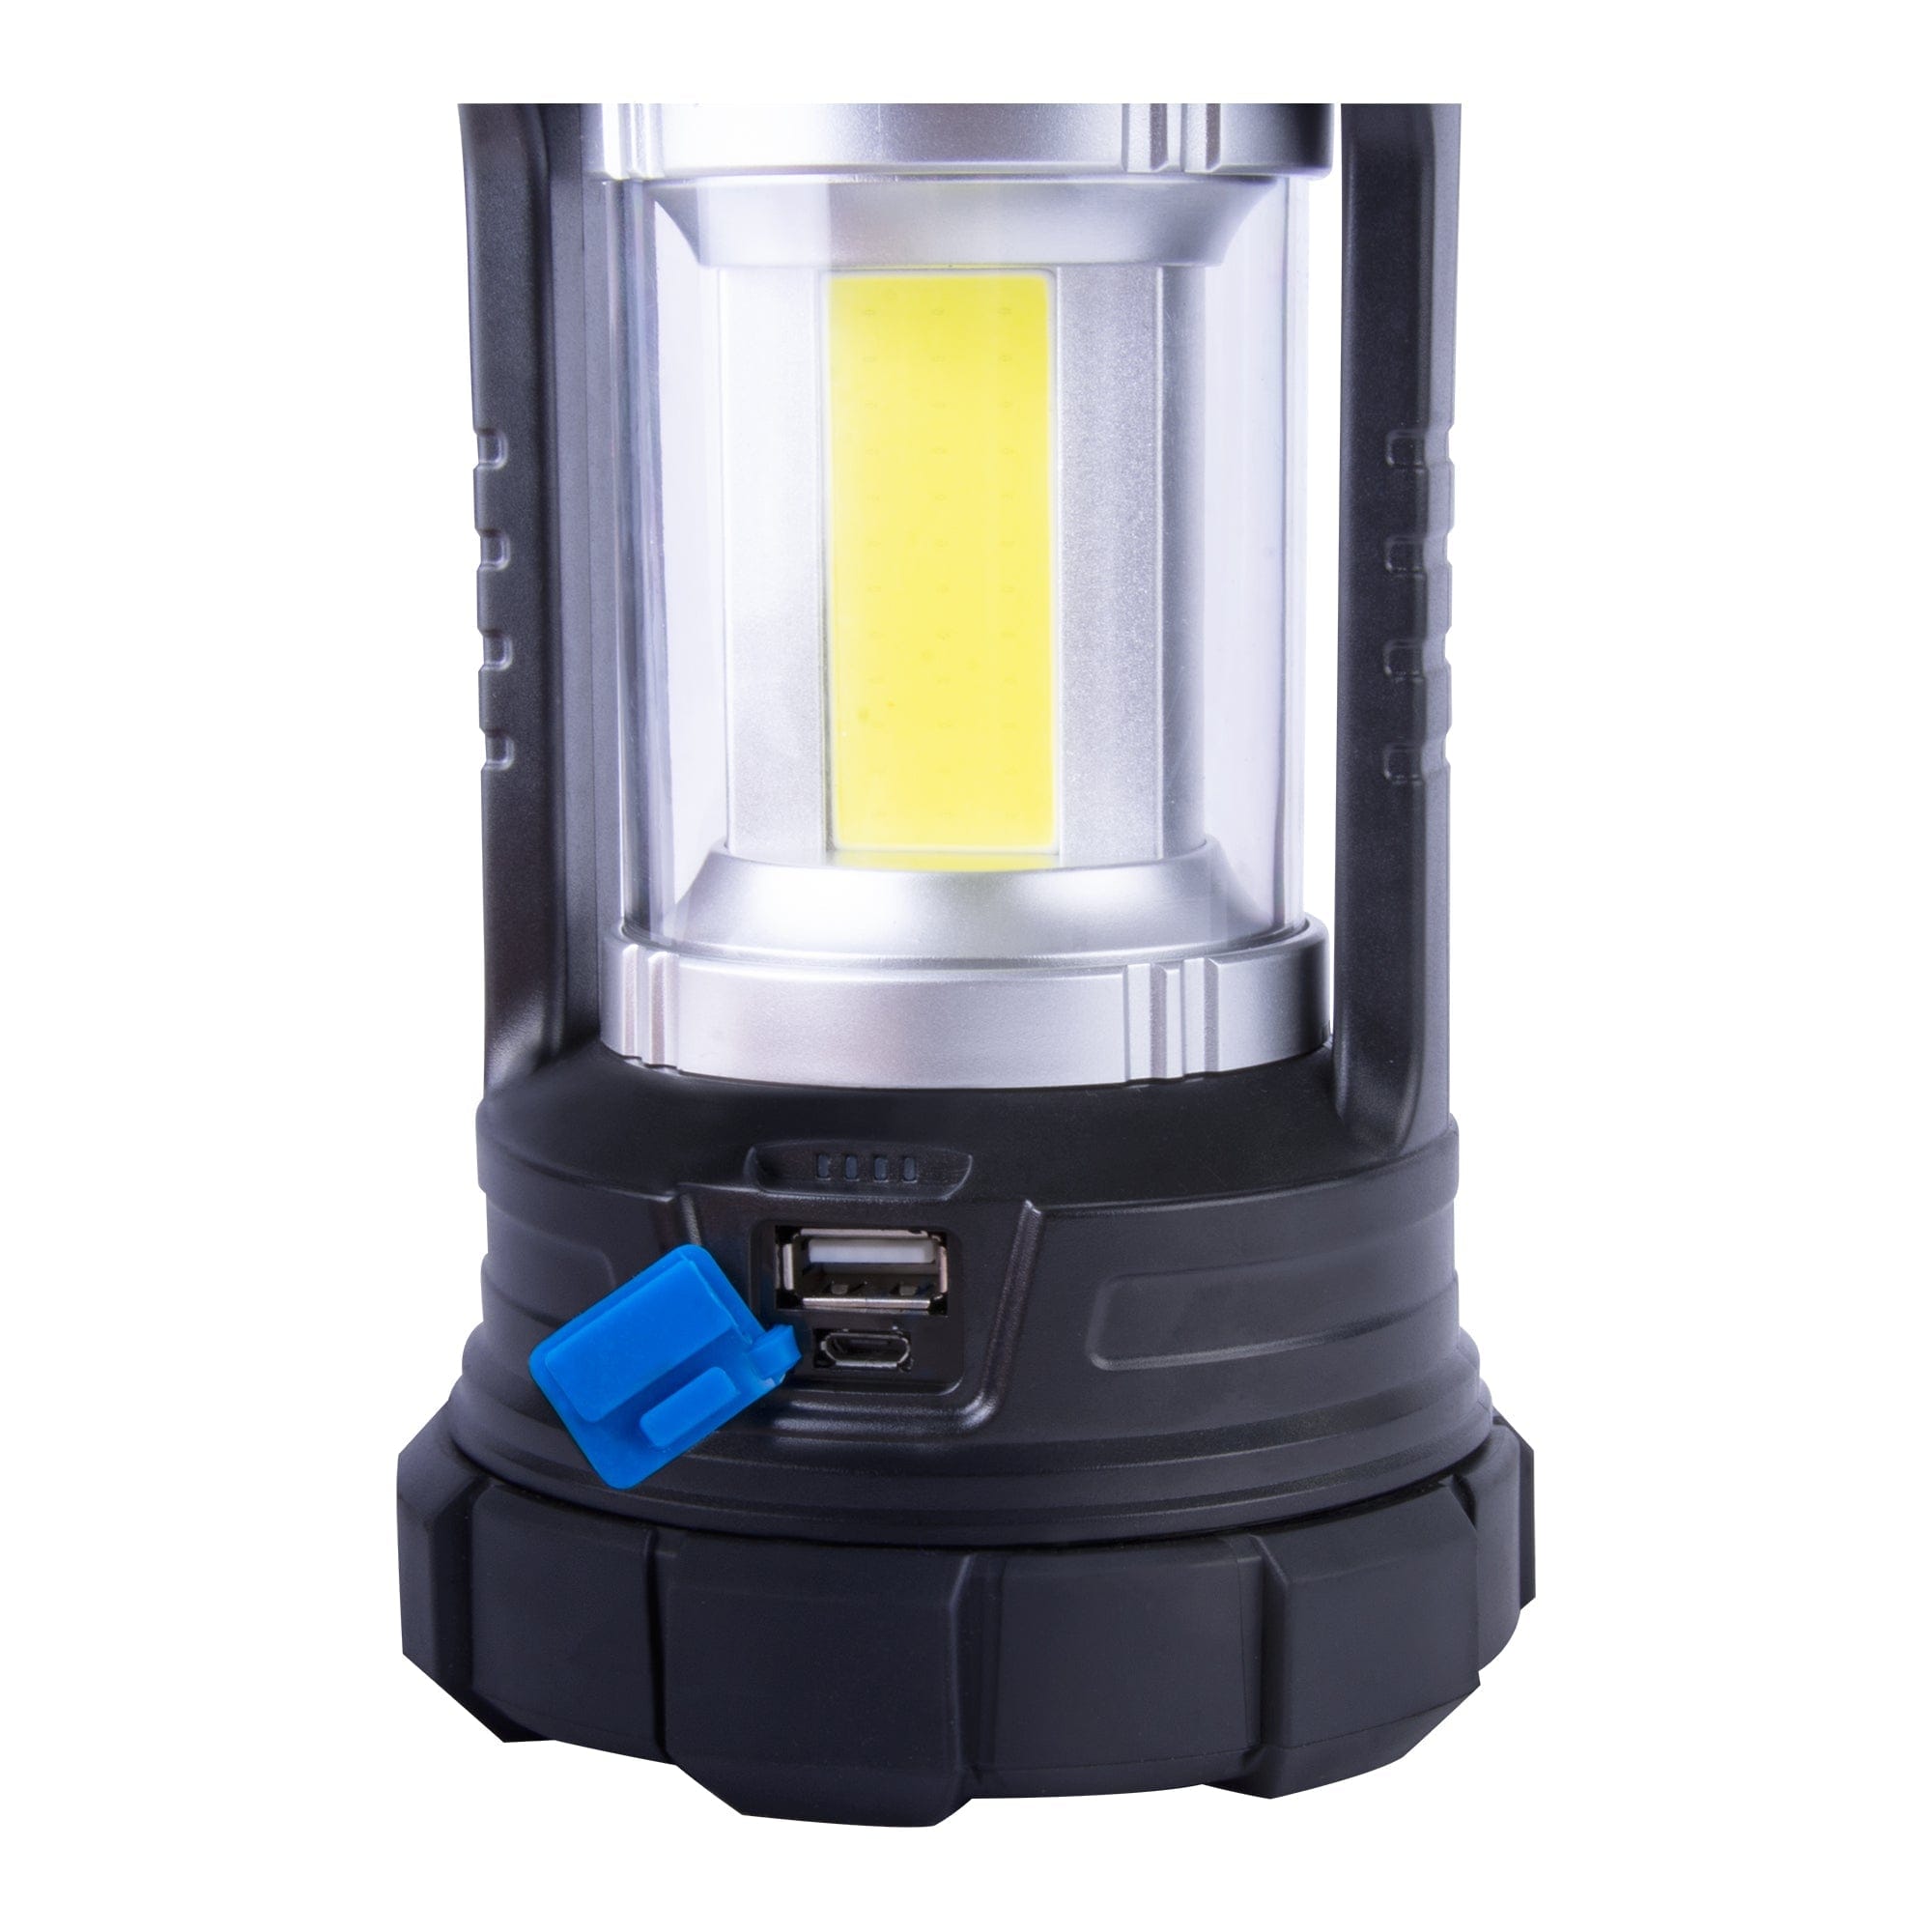 Brillar Electrical Nomad - 800 Lumen Rechargeable Lantern BR0070